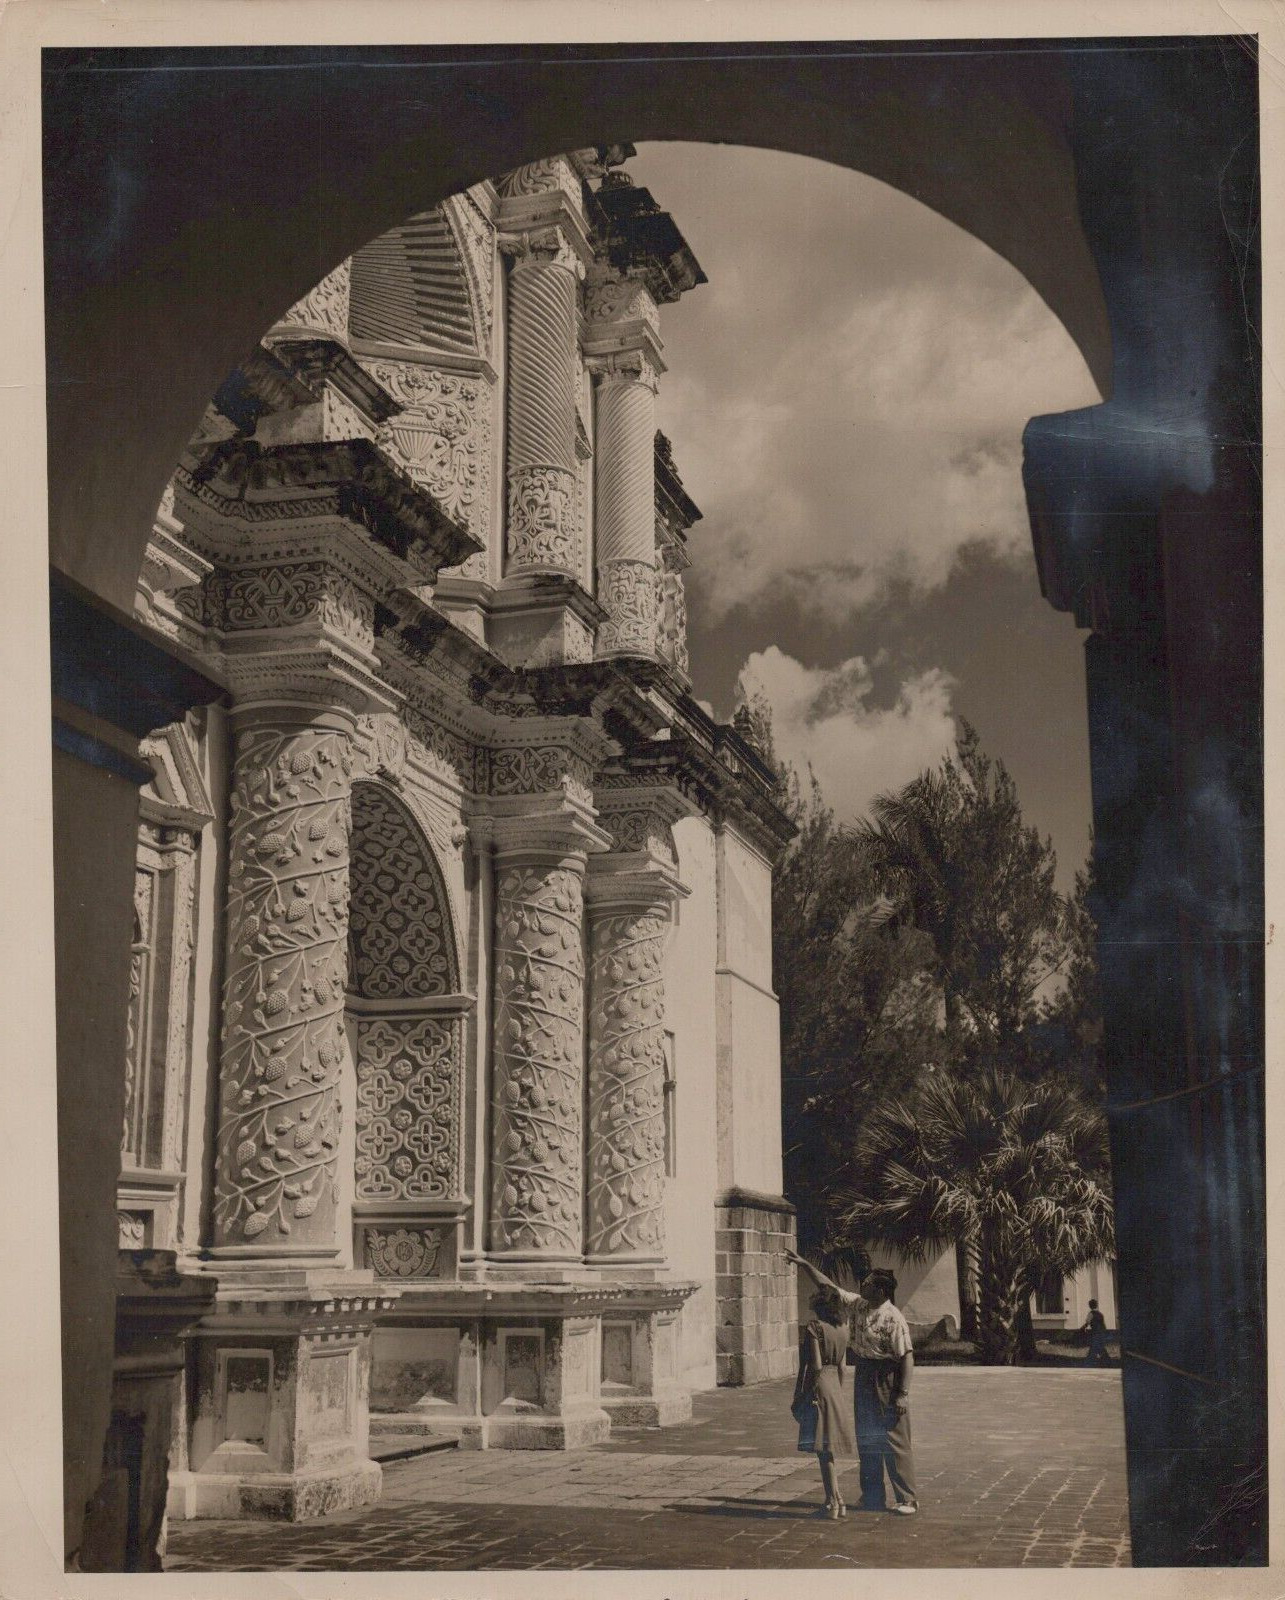 RARE GUATEMALA STREET SCENE PAN AM AIRWAYS ADVERTISING ORIG 1930s Photo 203